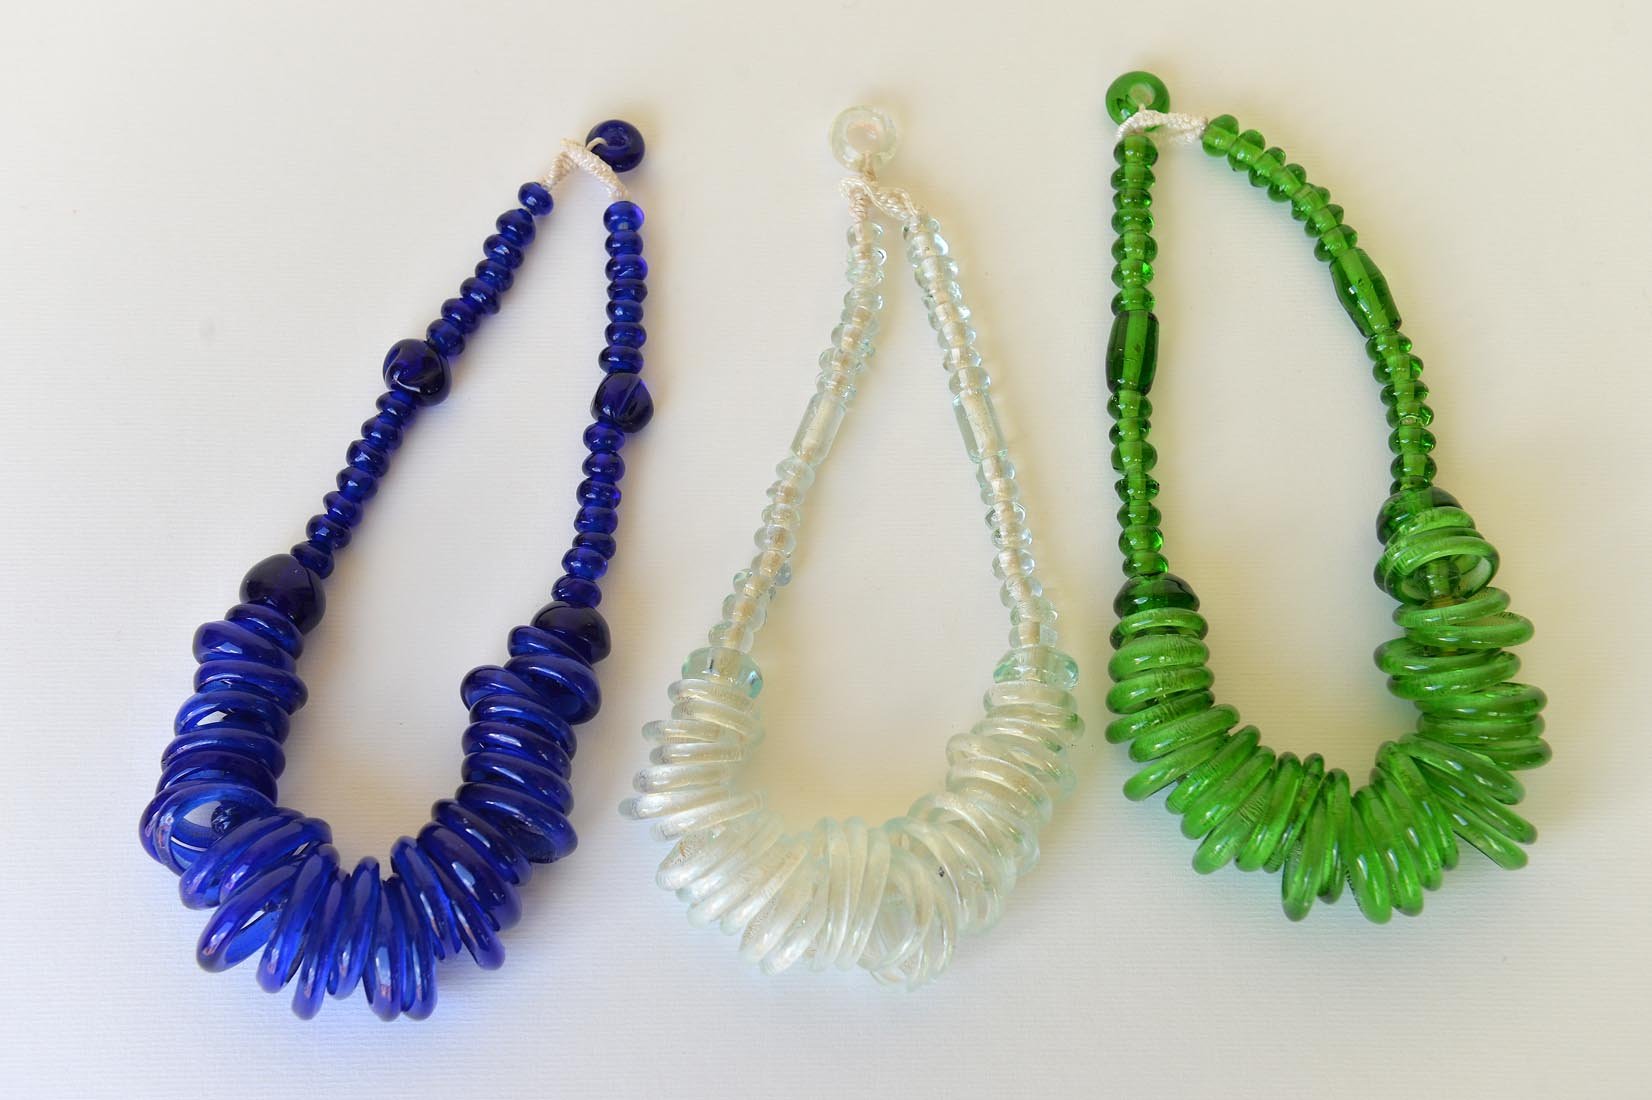 Recycled glass necklace - Natalia Willmott